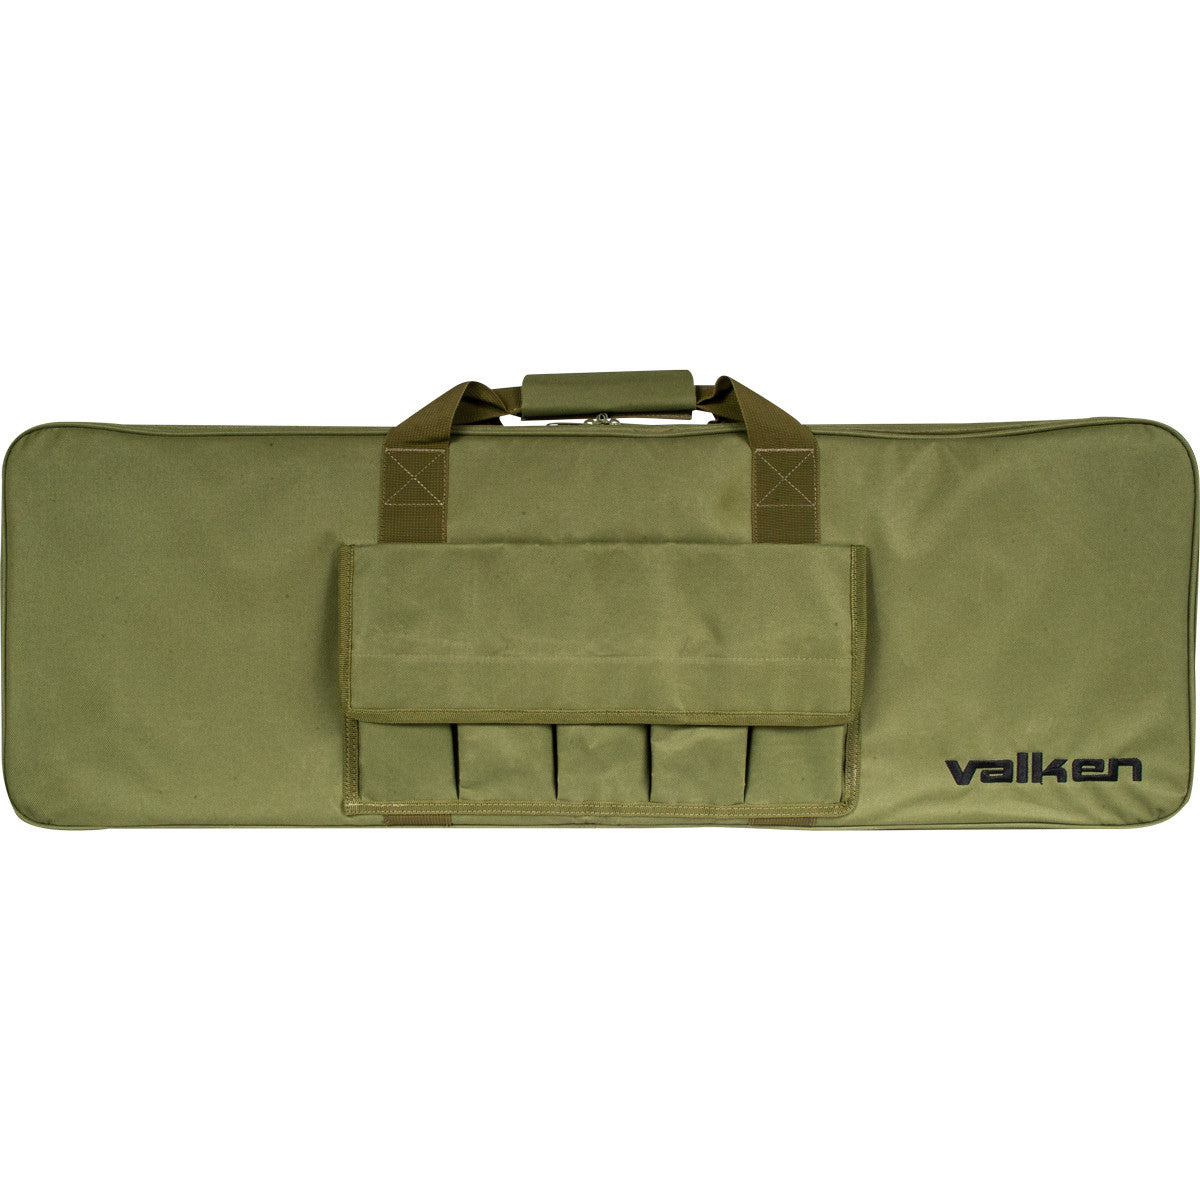 Valken 36 inch Soft Single Gun Bag (OD Green / Tan / Black)